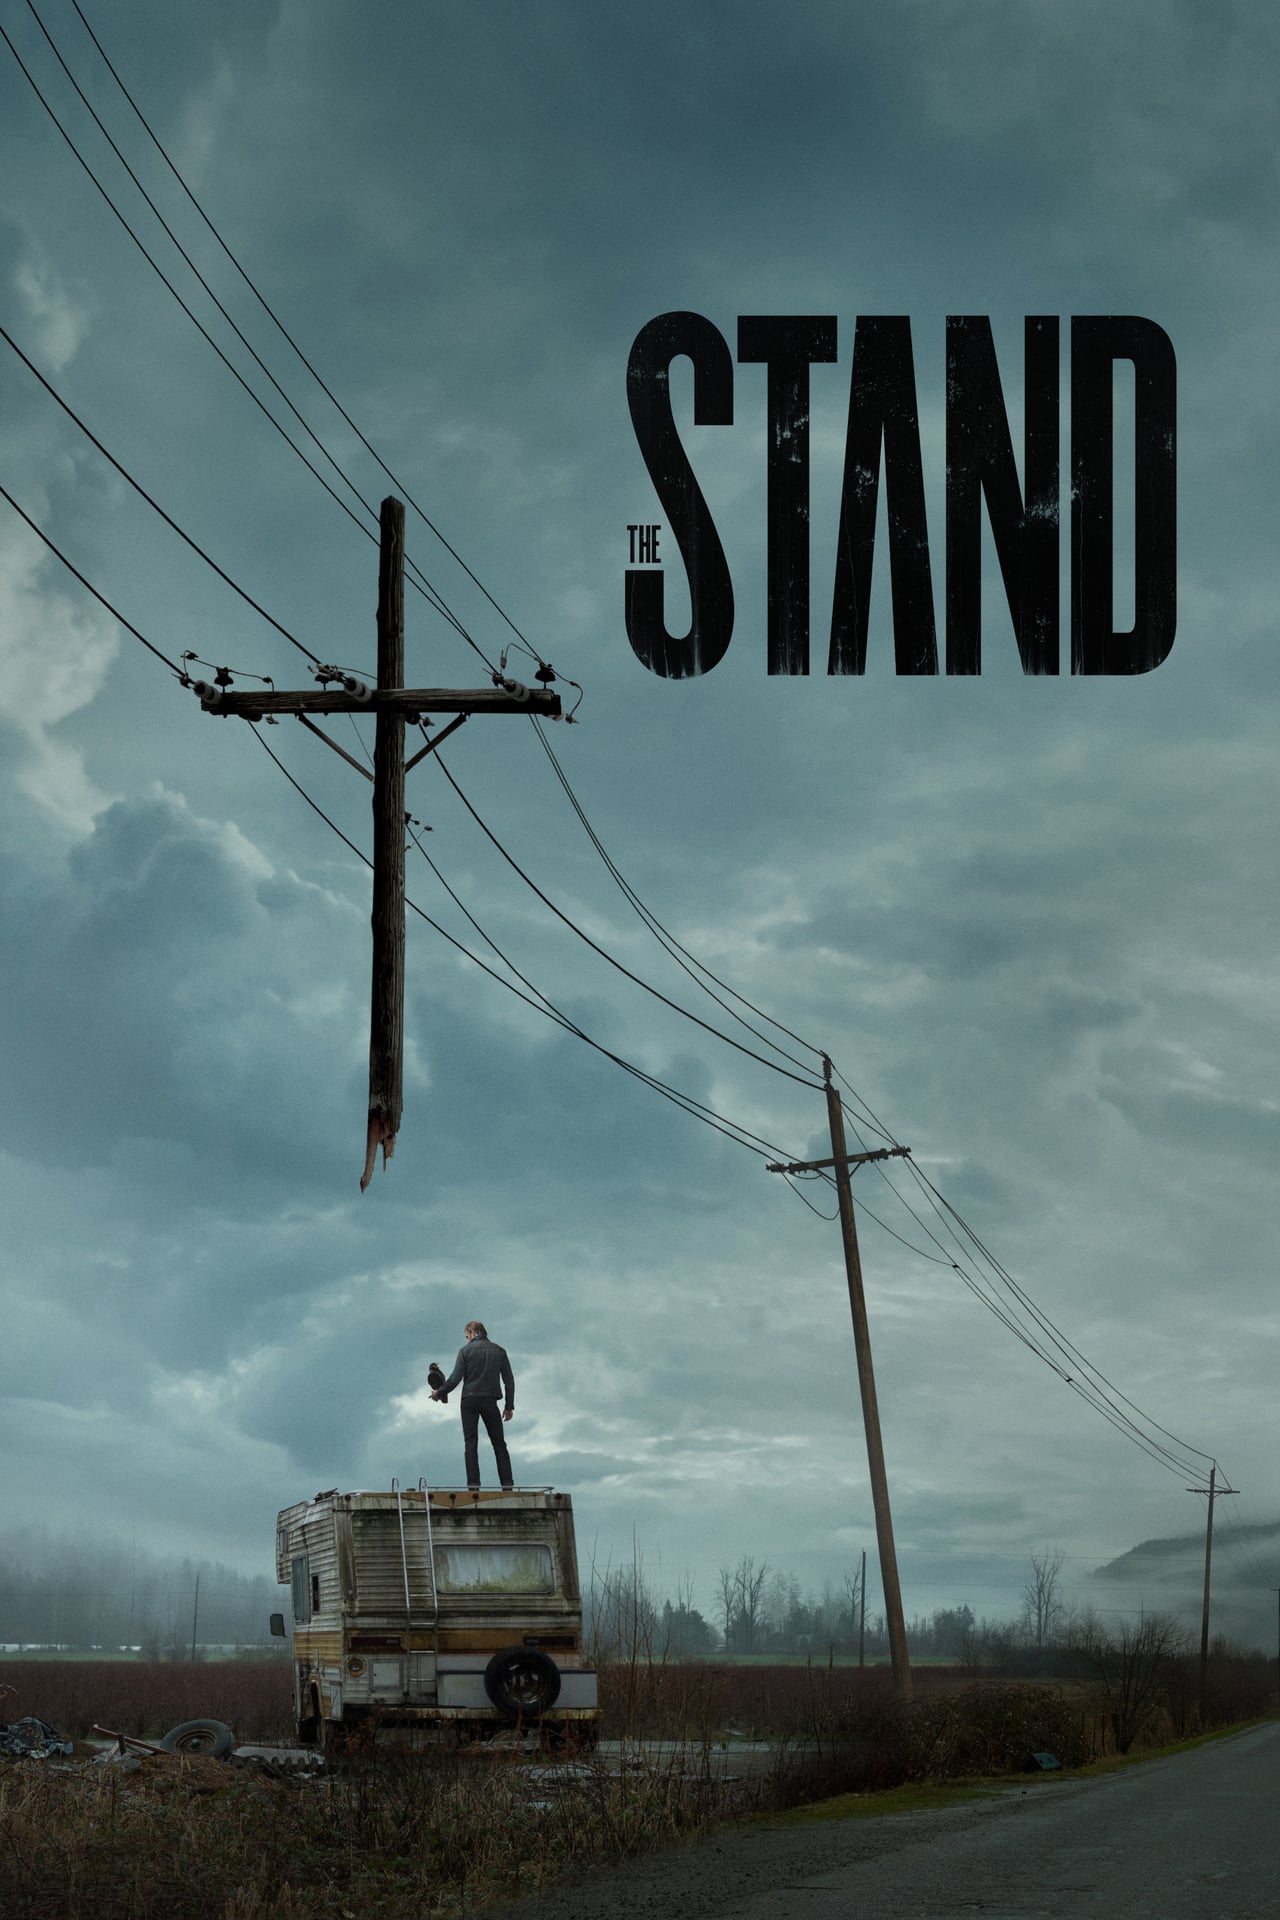 The Stand (season 1)